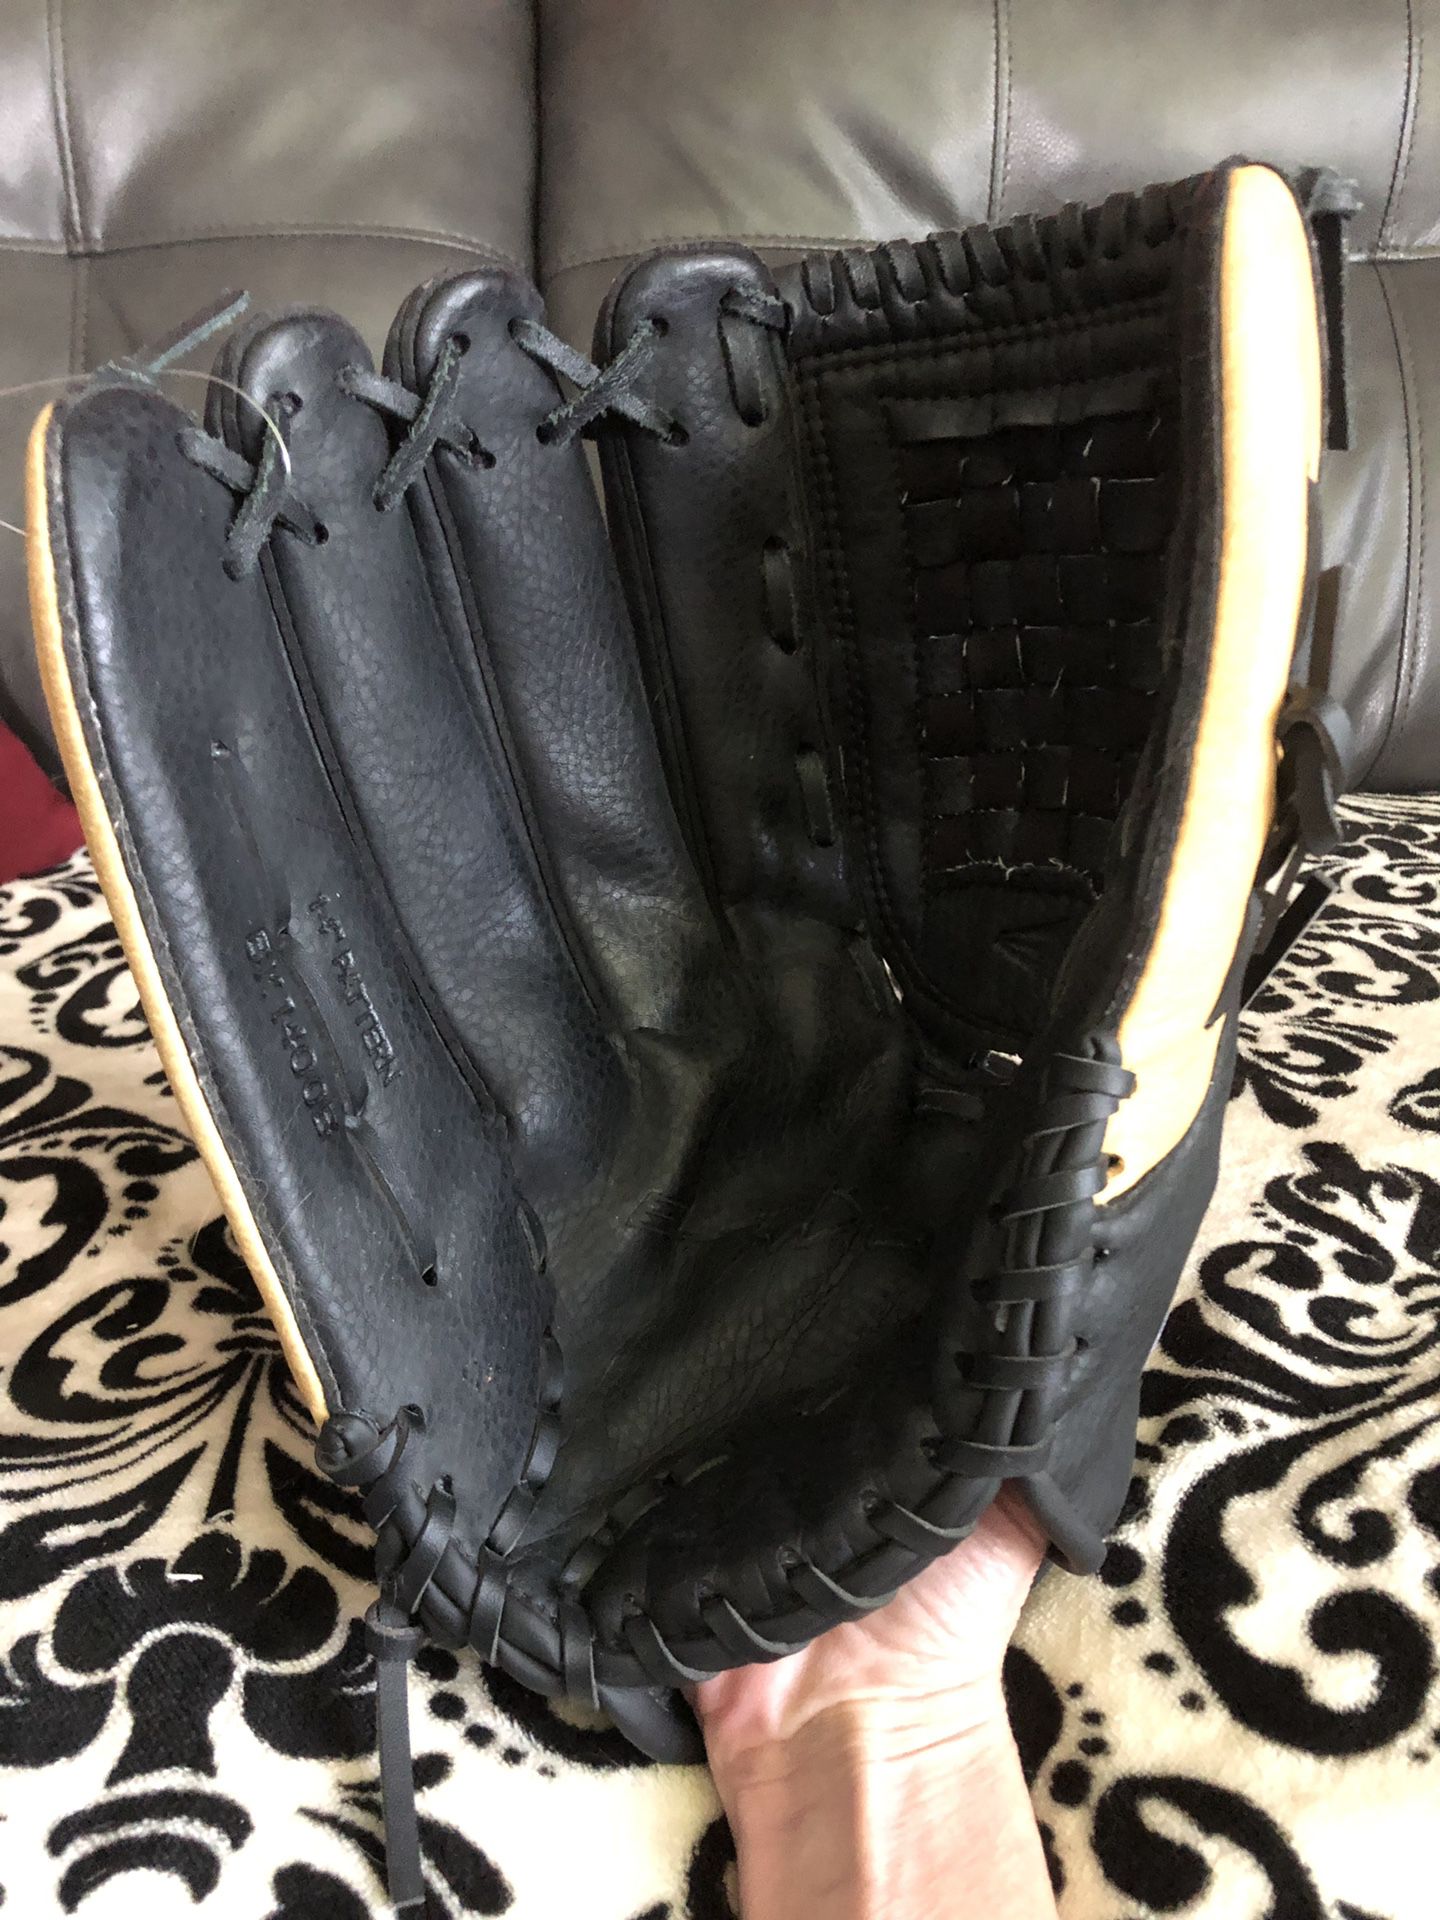 Easton Black Magic 14” LHT softball glove